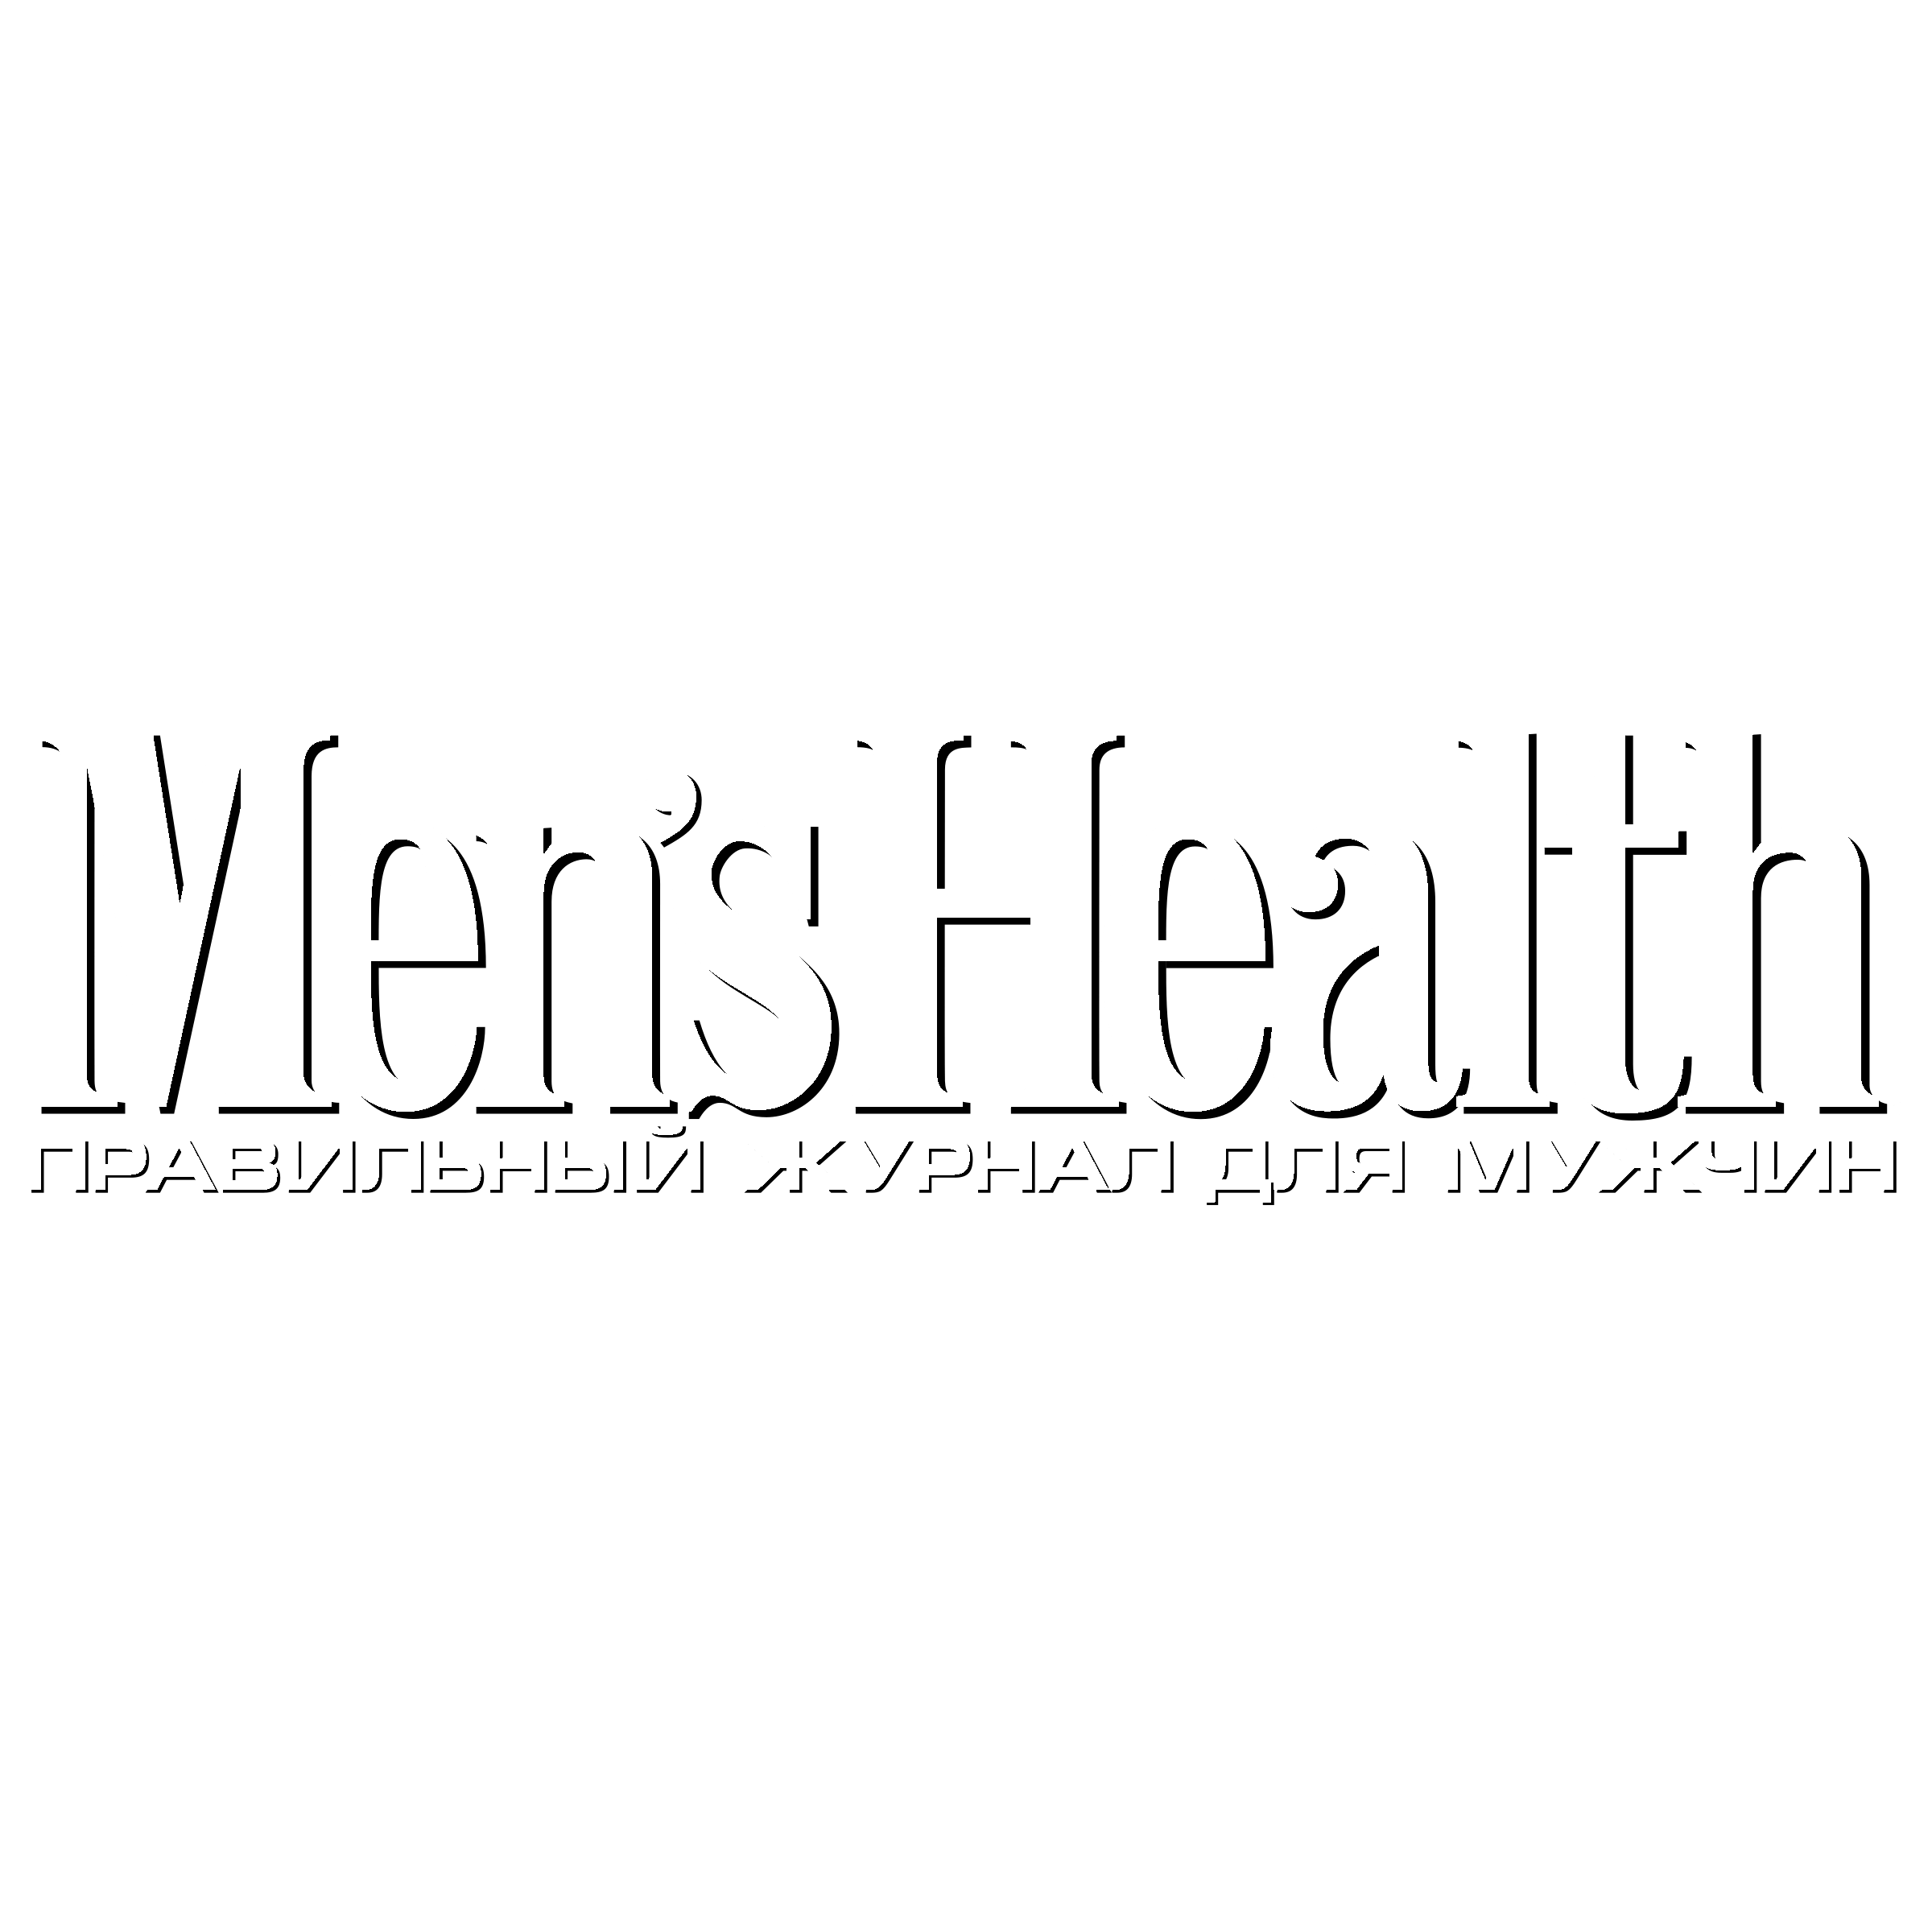 Men's Health Logo - Men's Health Logo PNG Transparent & SVG Vector